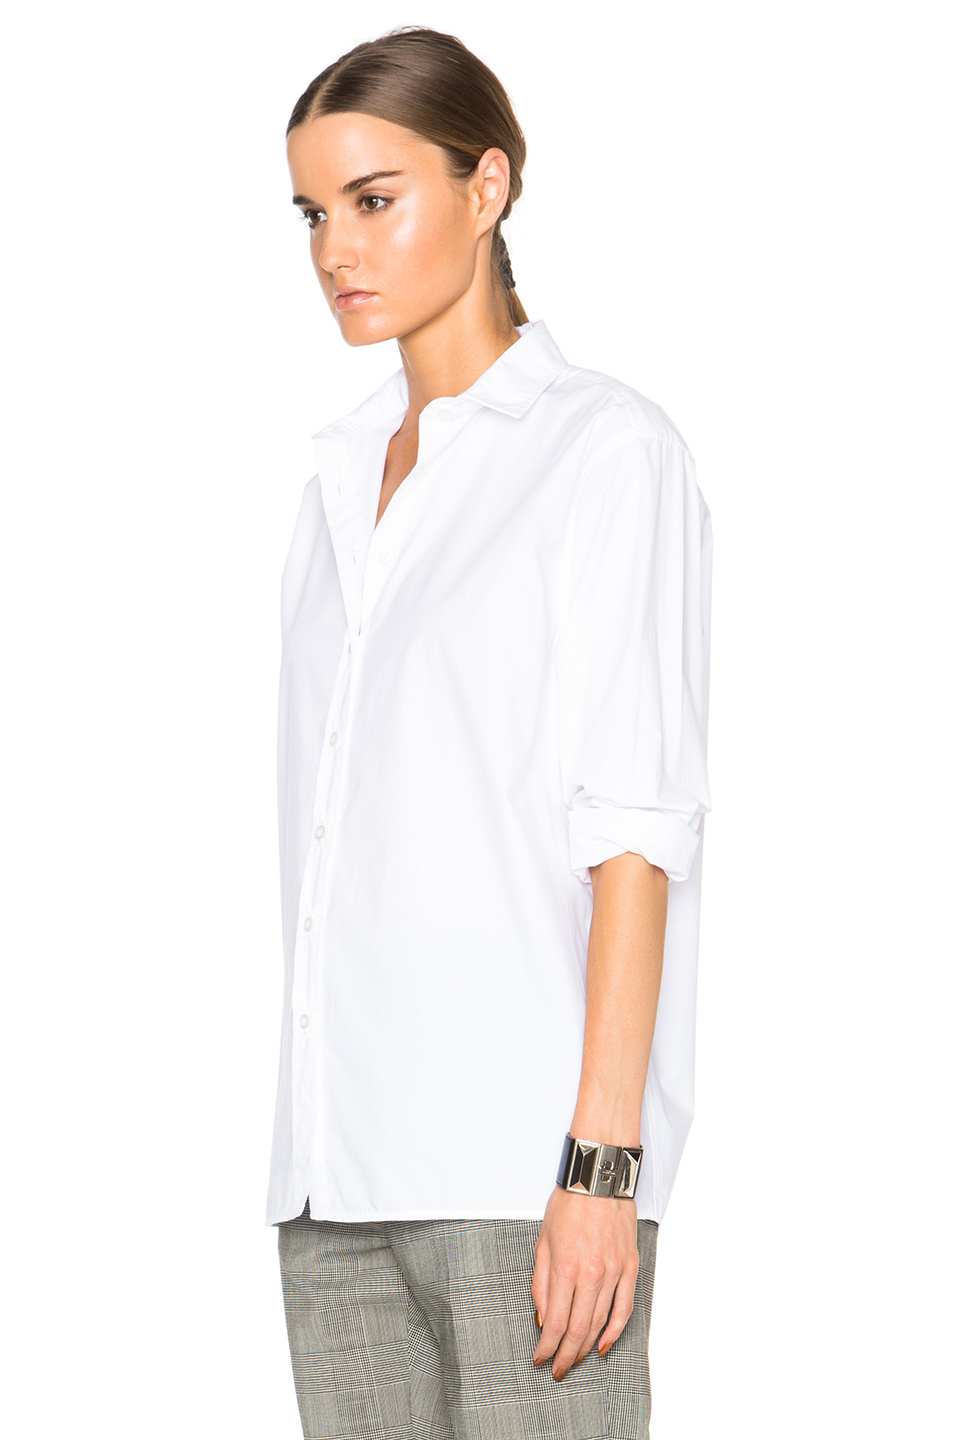 Lyst - Totême Capri Shirt in White